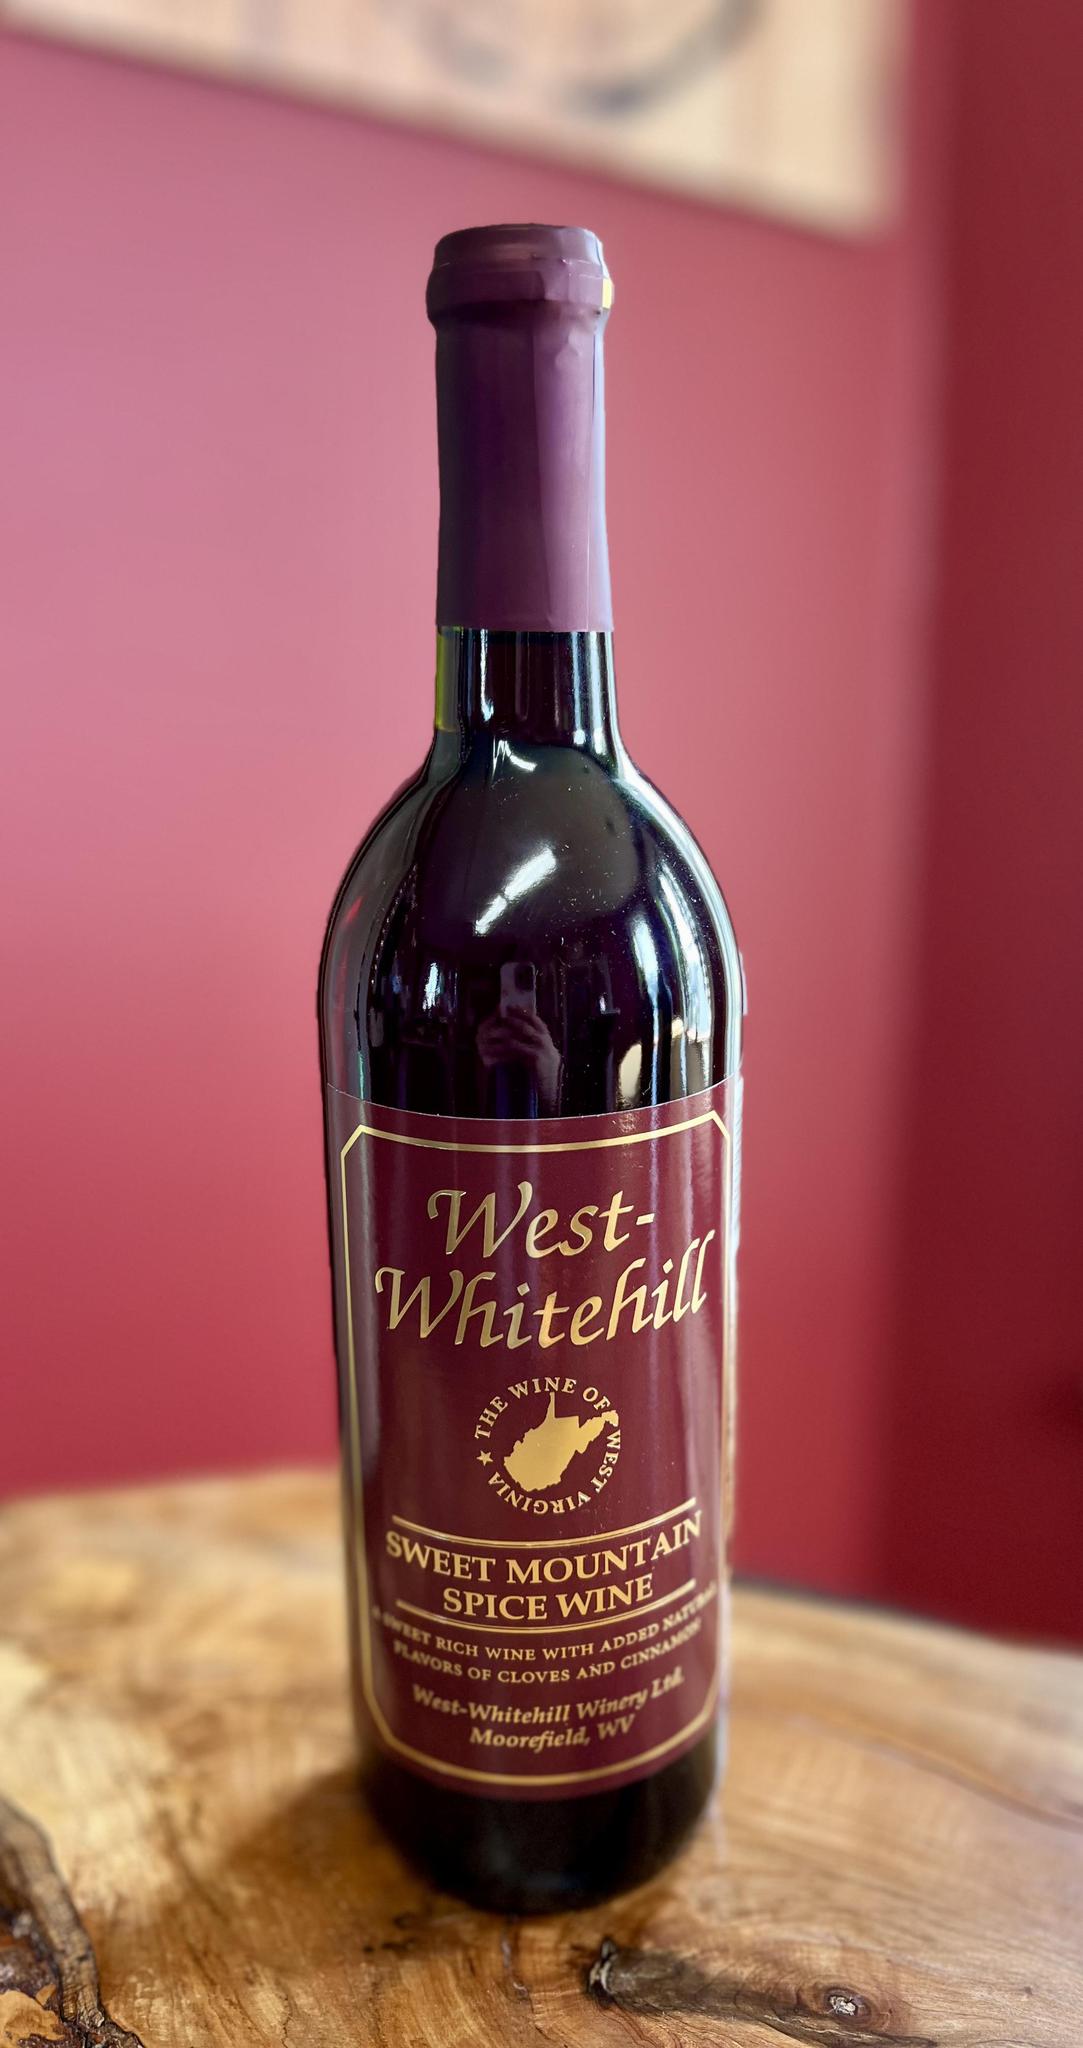 West Whitehill Sweet Mountain Spice Wine